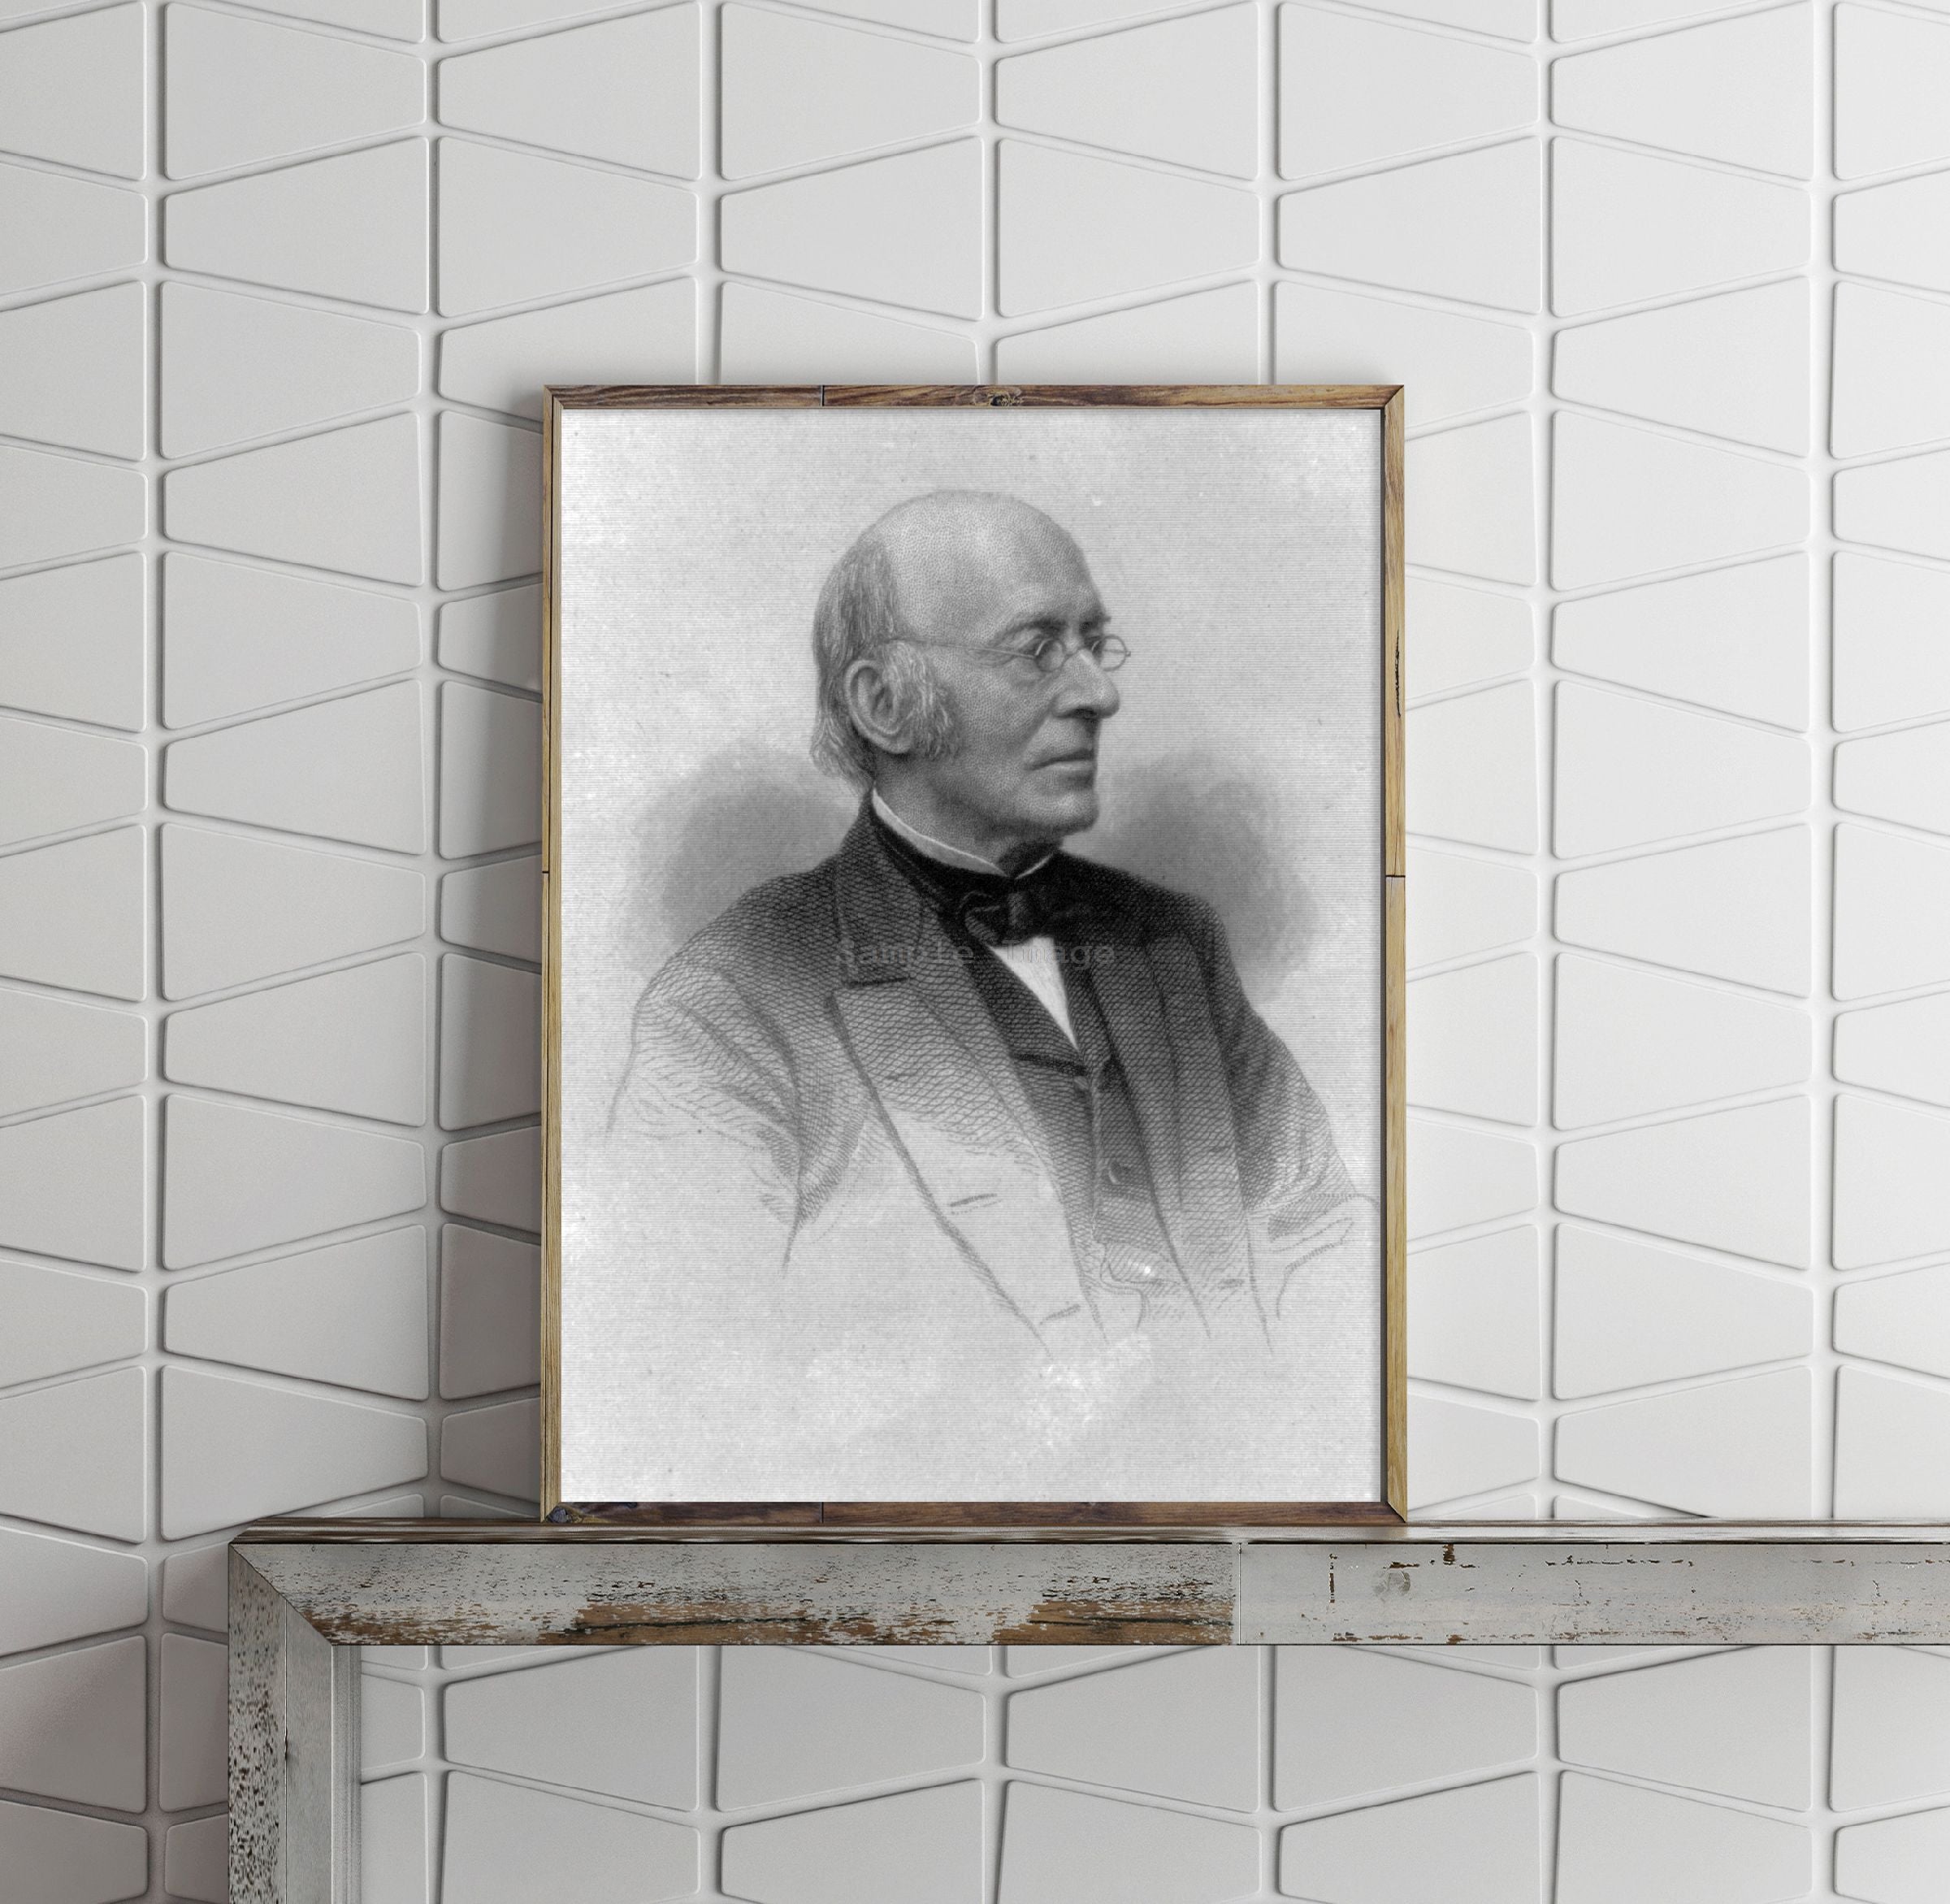 Photograph of William Lloyd Garrison